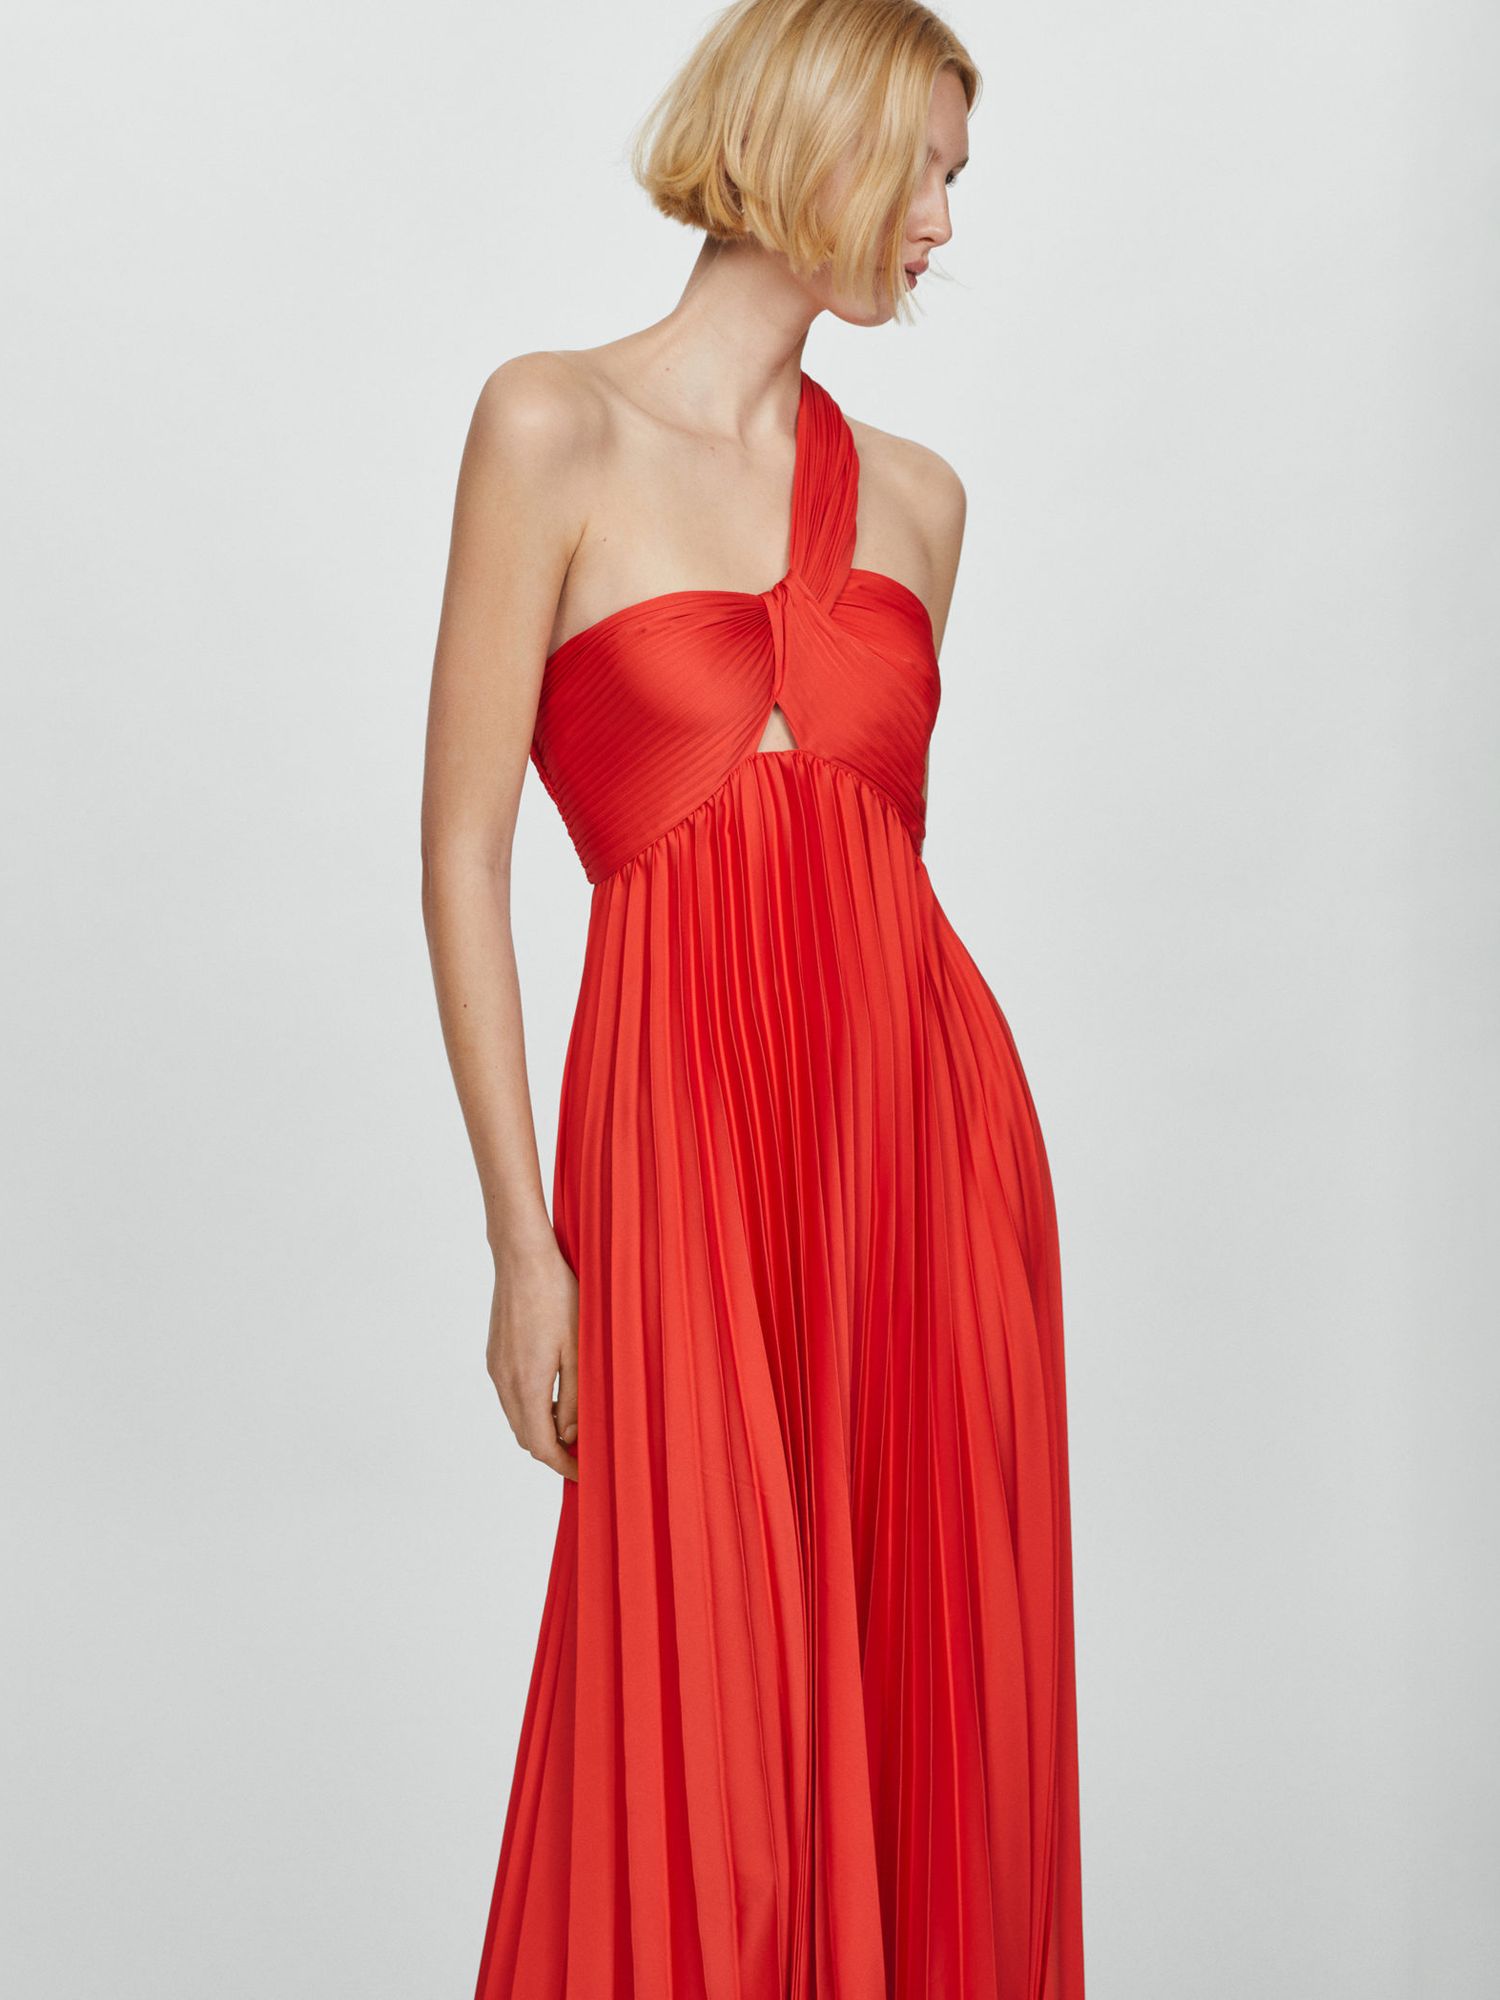 Mango Claudi Pleated One Shoulder Maxi Dress, Red, 10